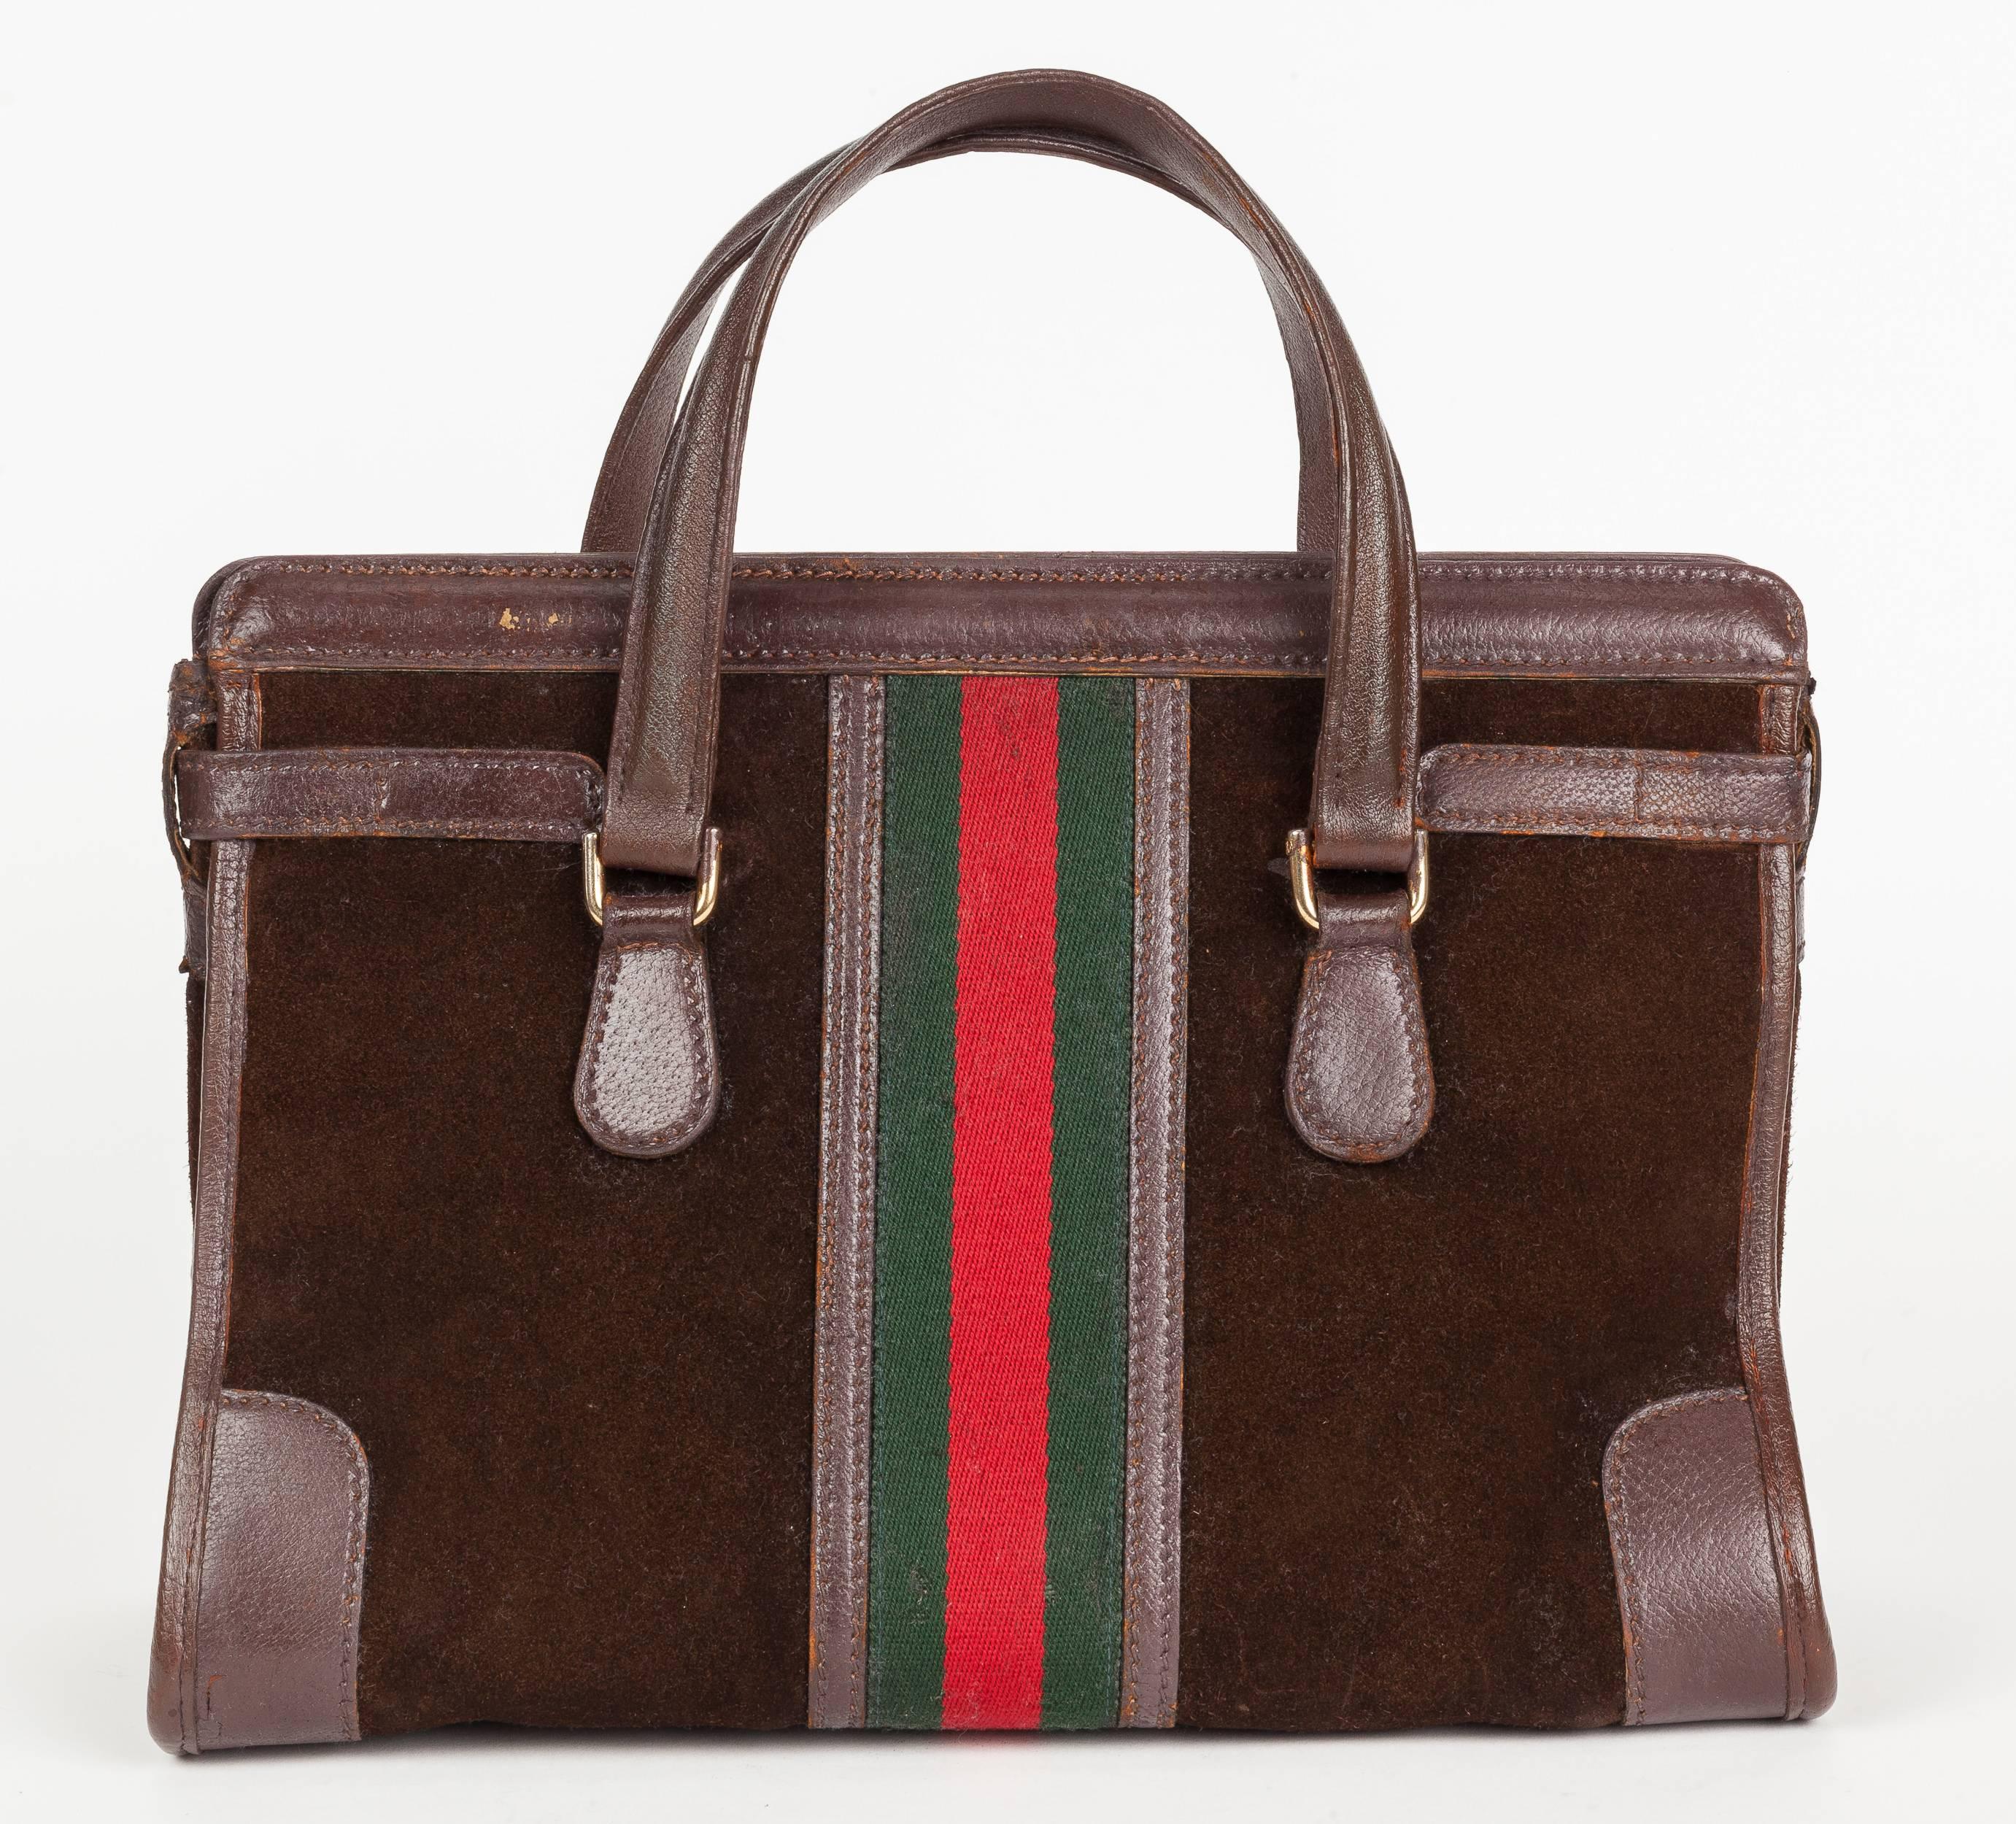 Black Rare 1970s Gucci Brown Suede Doctor's Bag Handbag Tote w/Gucci Racer Stripe